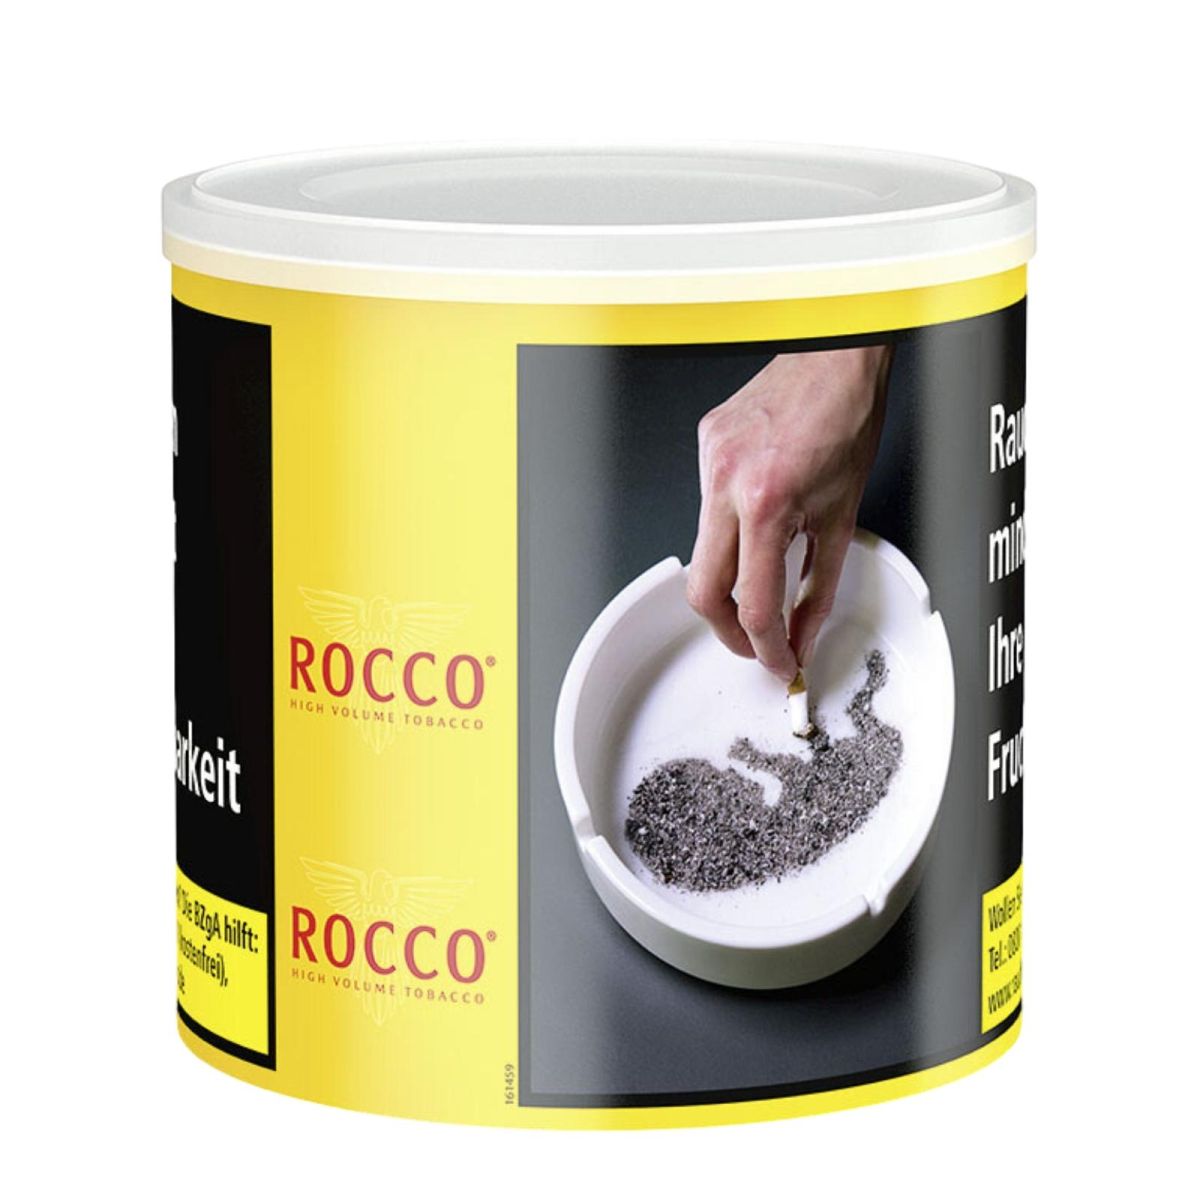 Rocco Rocco High Volume Tobacco bei www.Tabakring.de kaufen